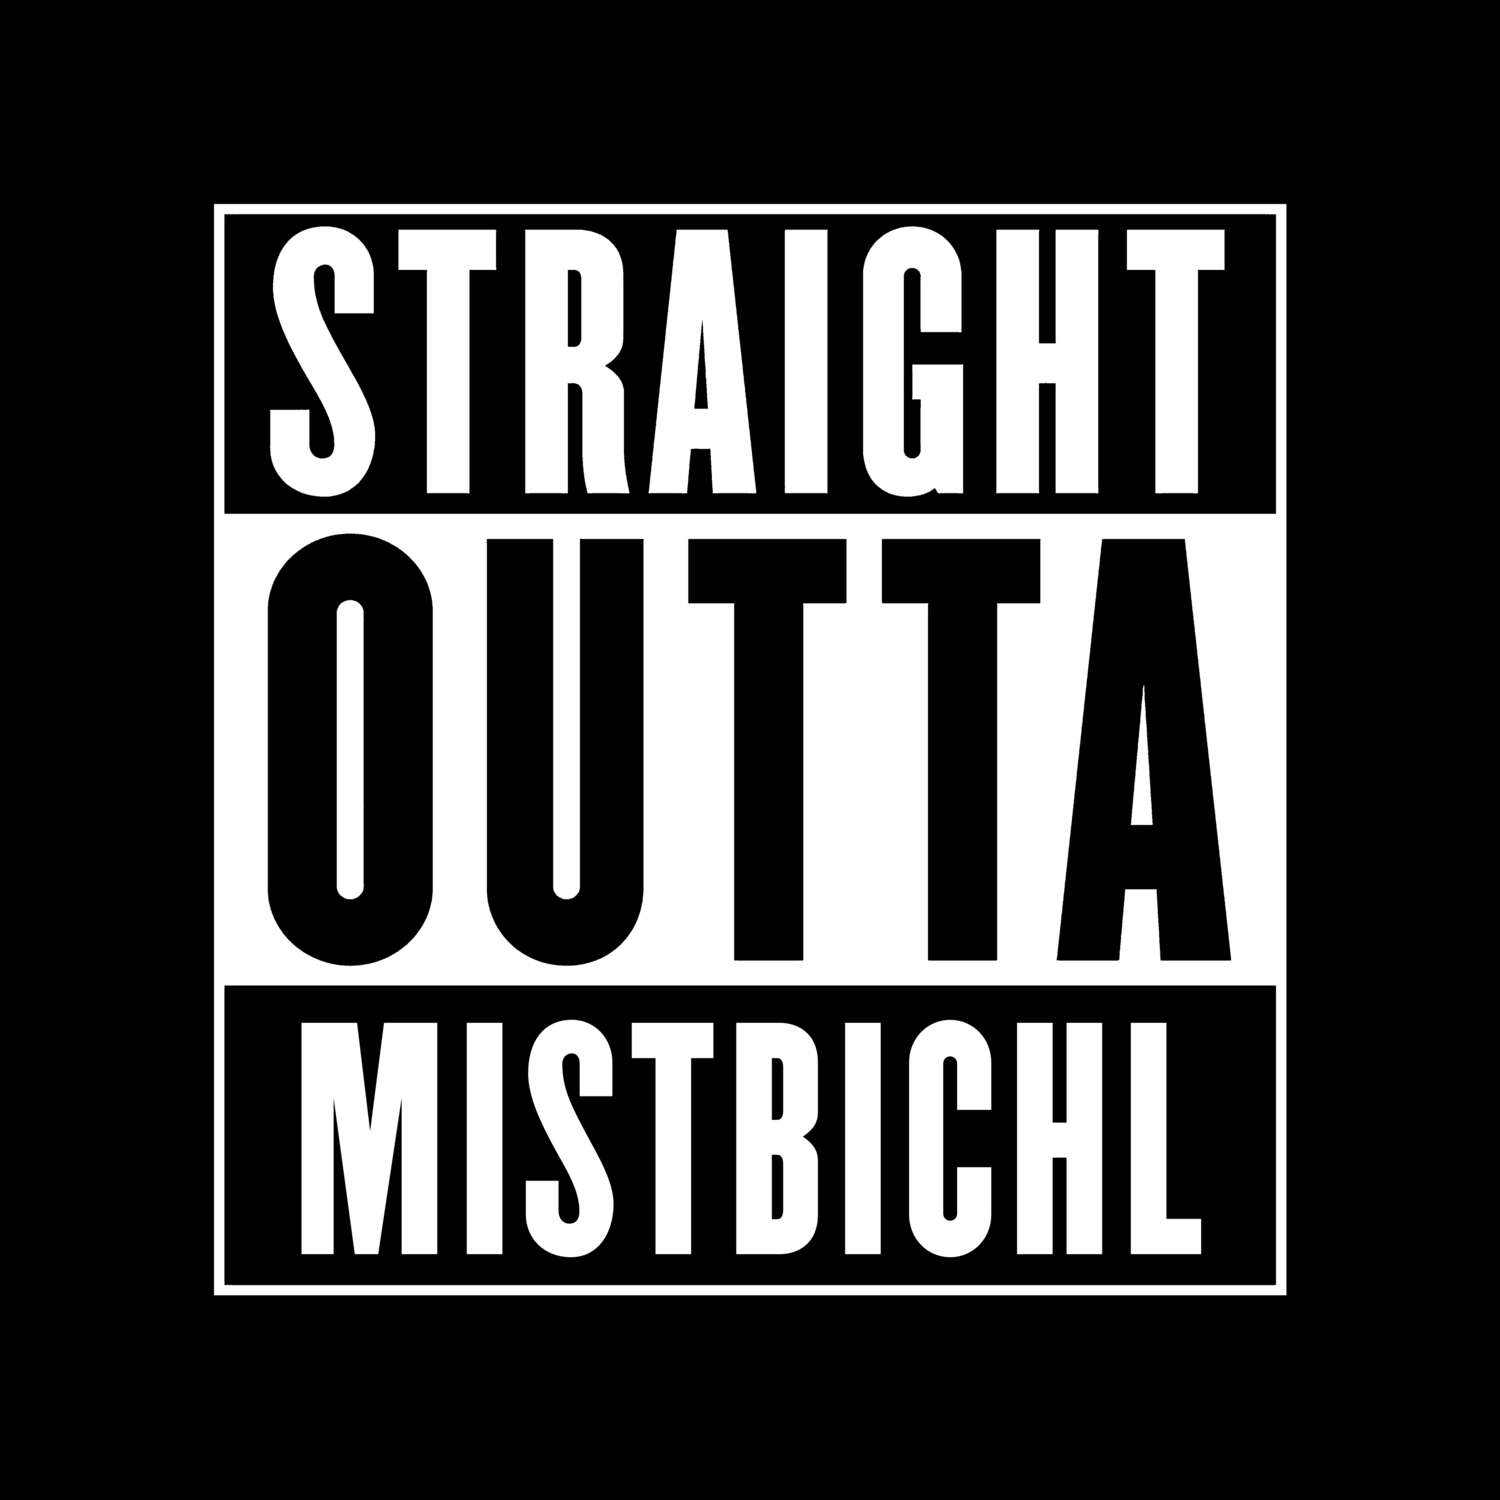 Mistbichl T-Shirt »Straight Outta«